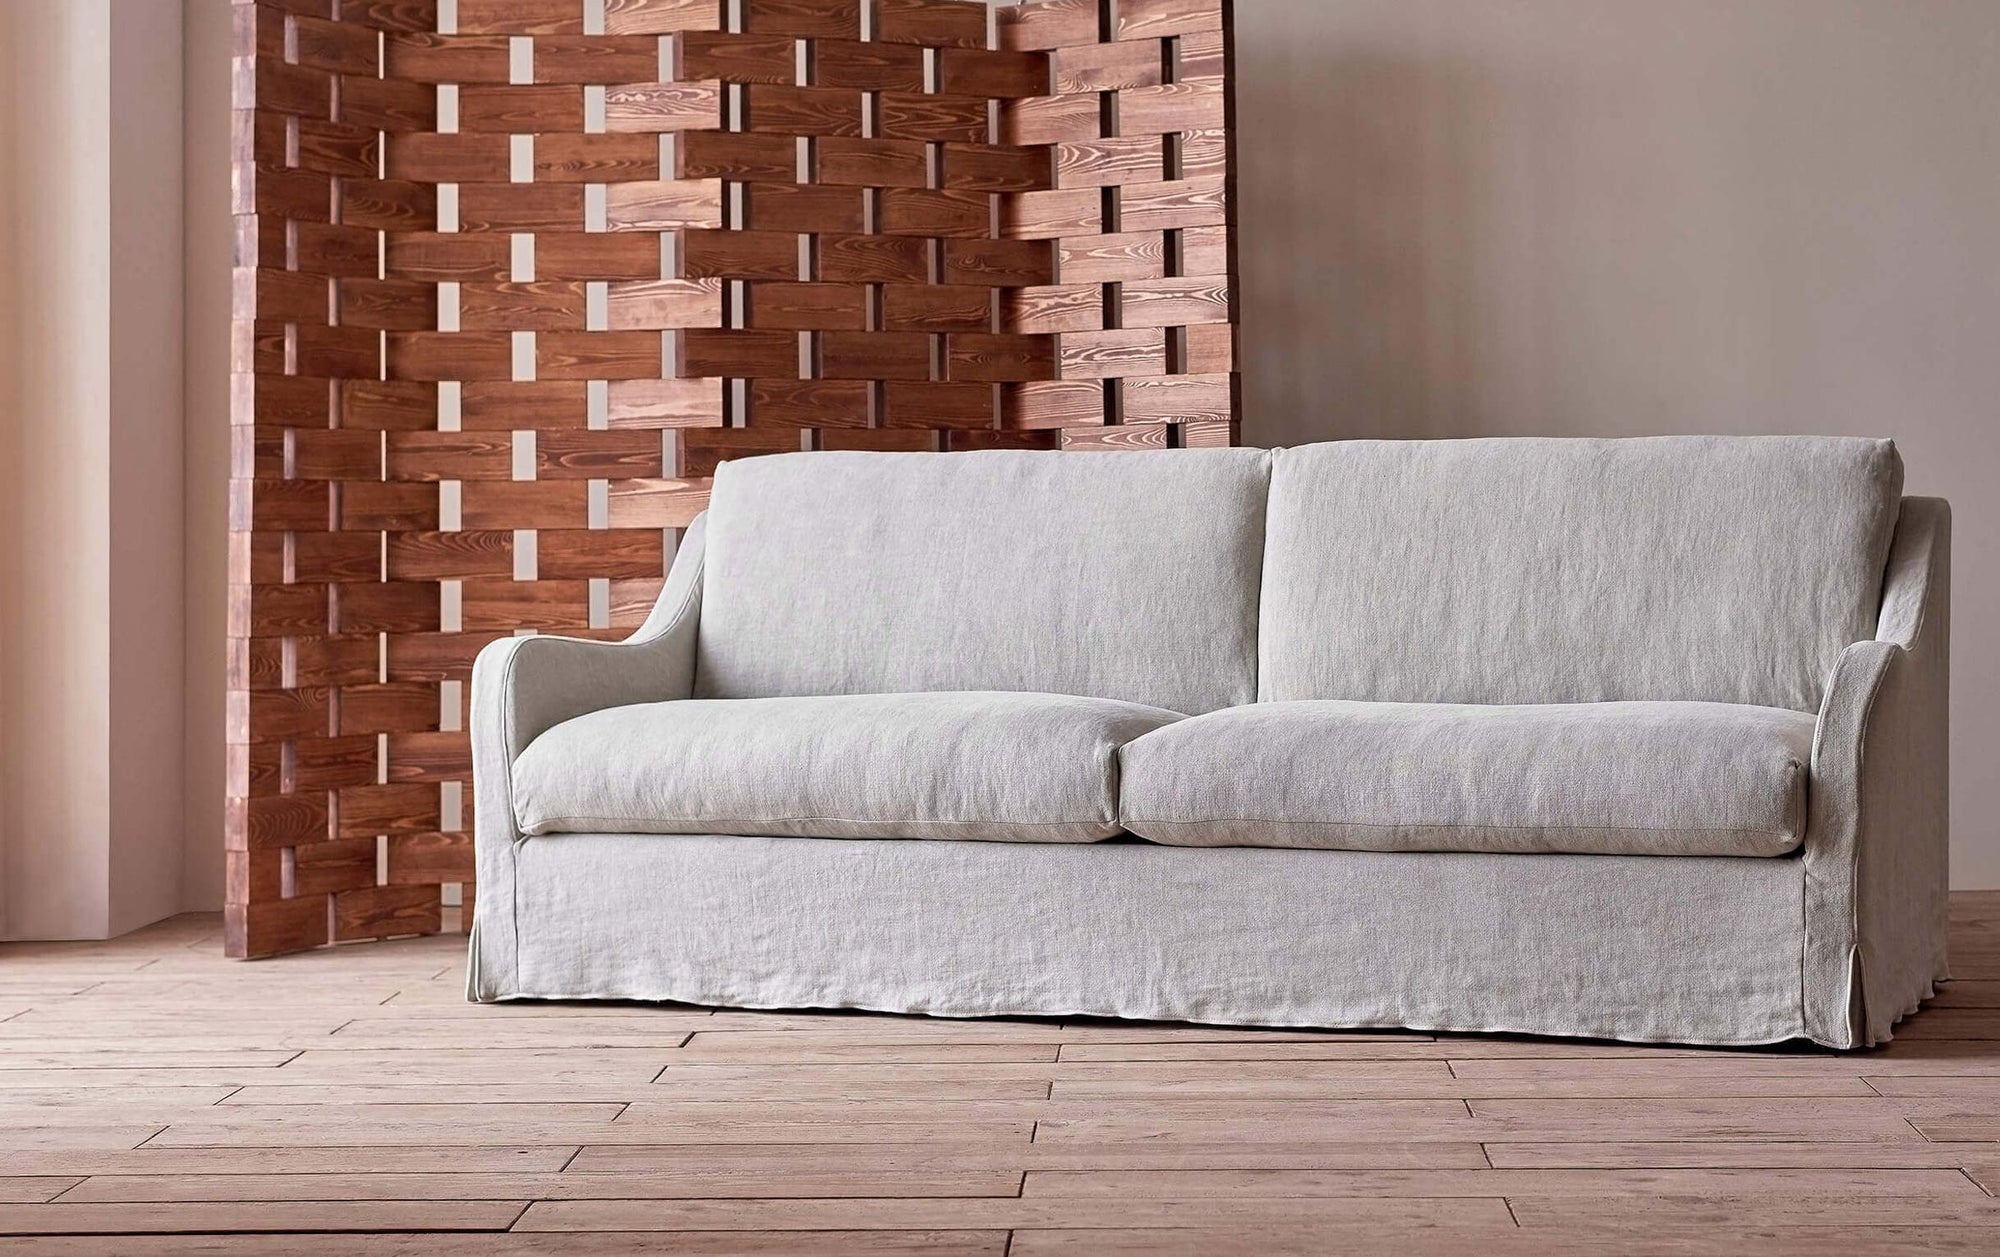 Esmé 96" Sofa in Jasmine Rice, a light warm greige Medium Weight Linen, in front of a wooden folding screen